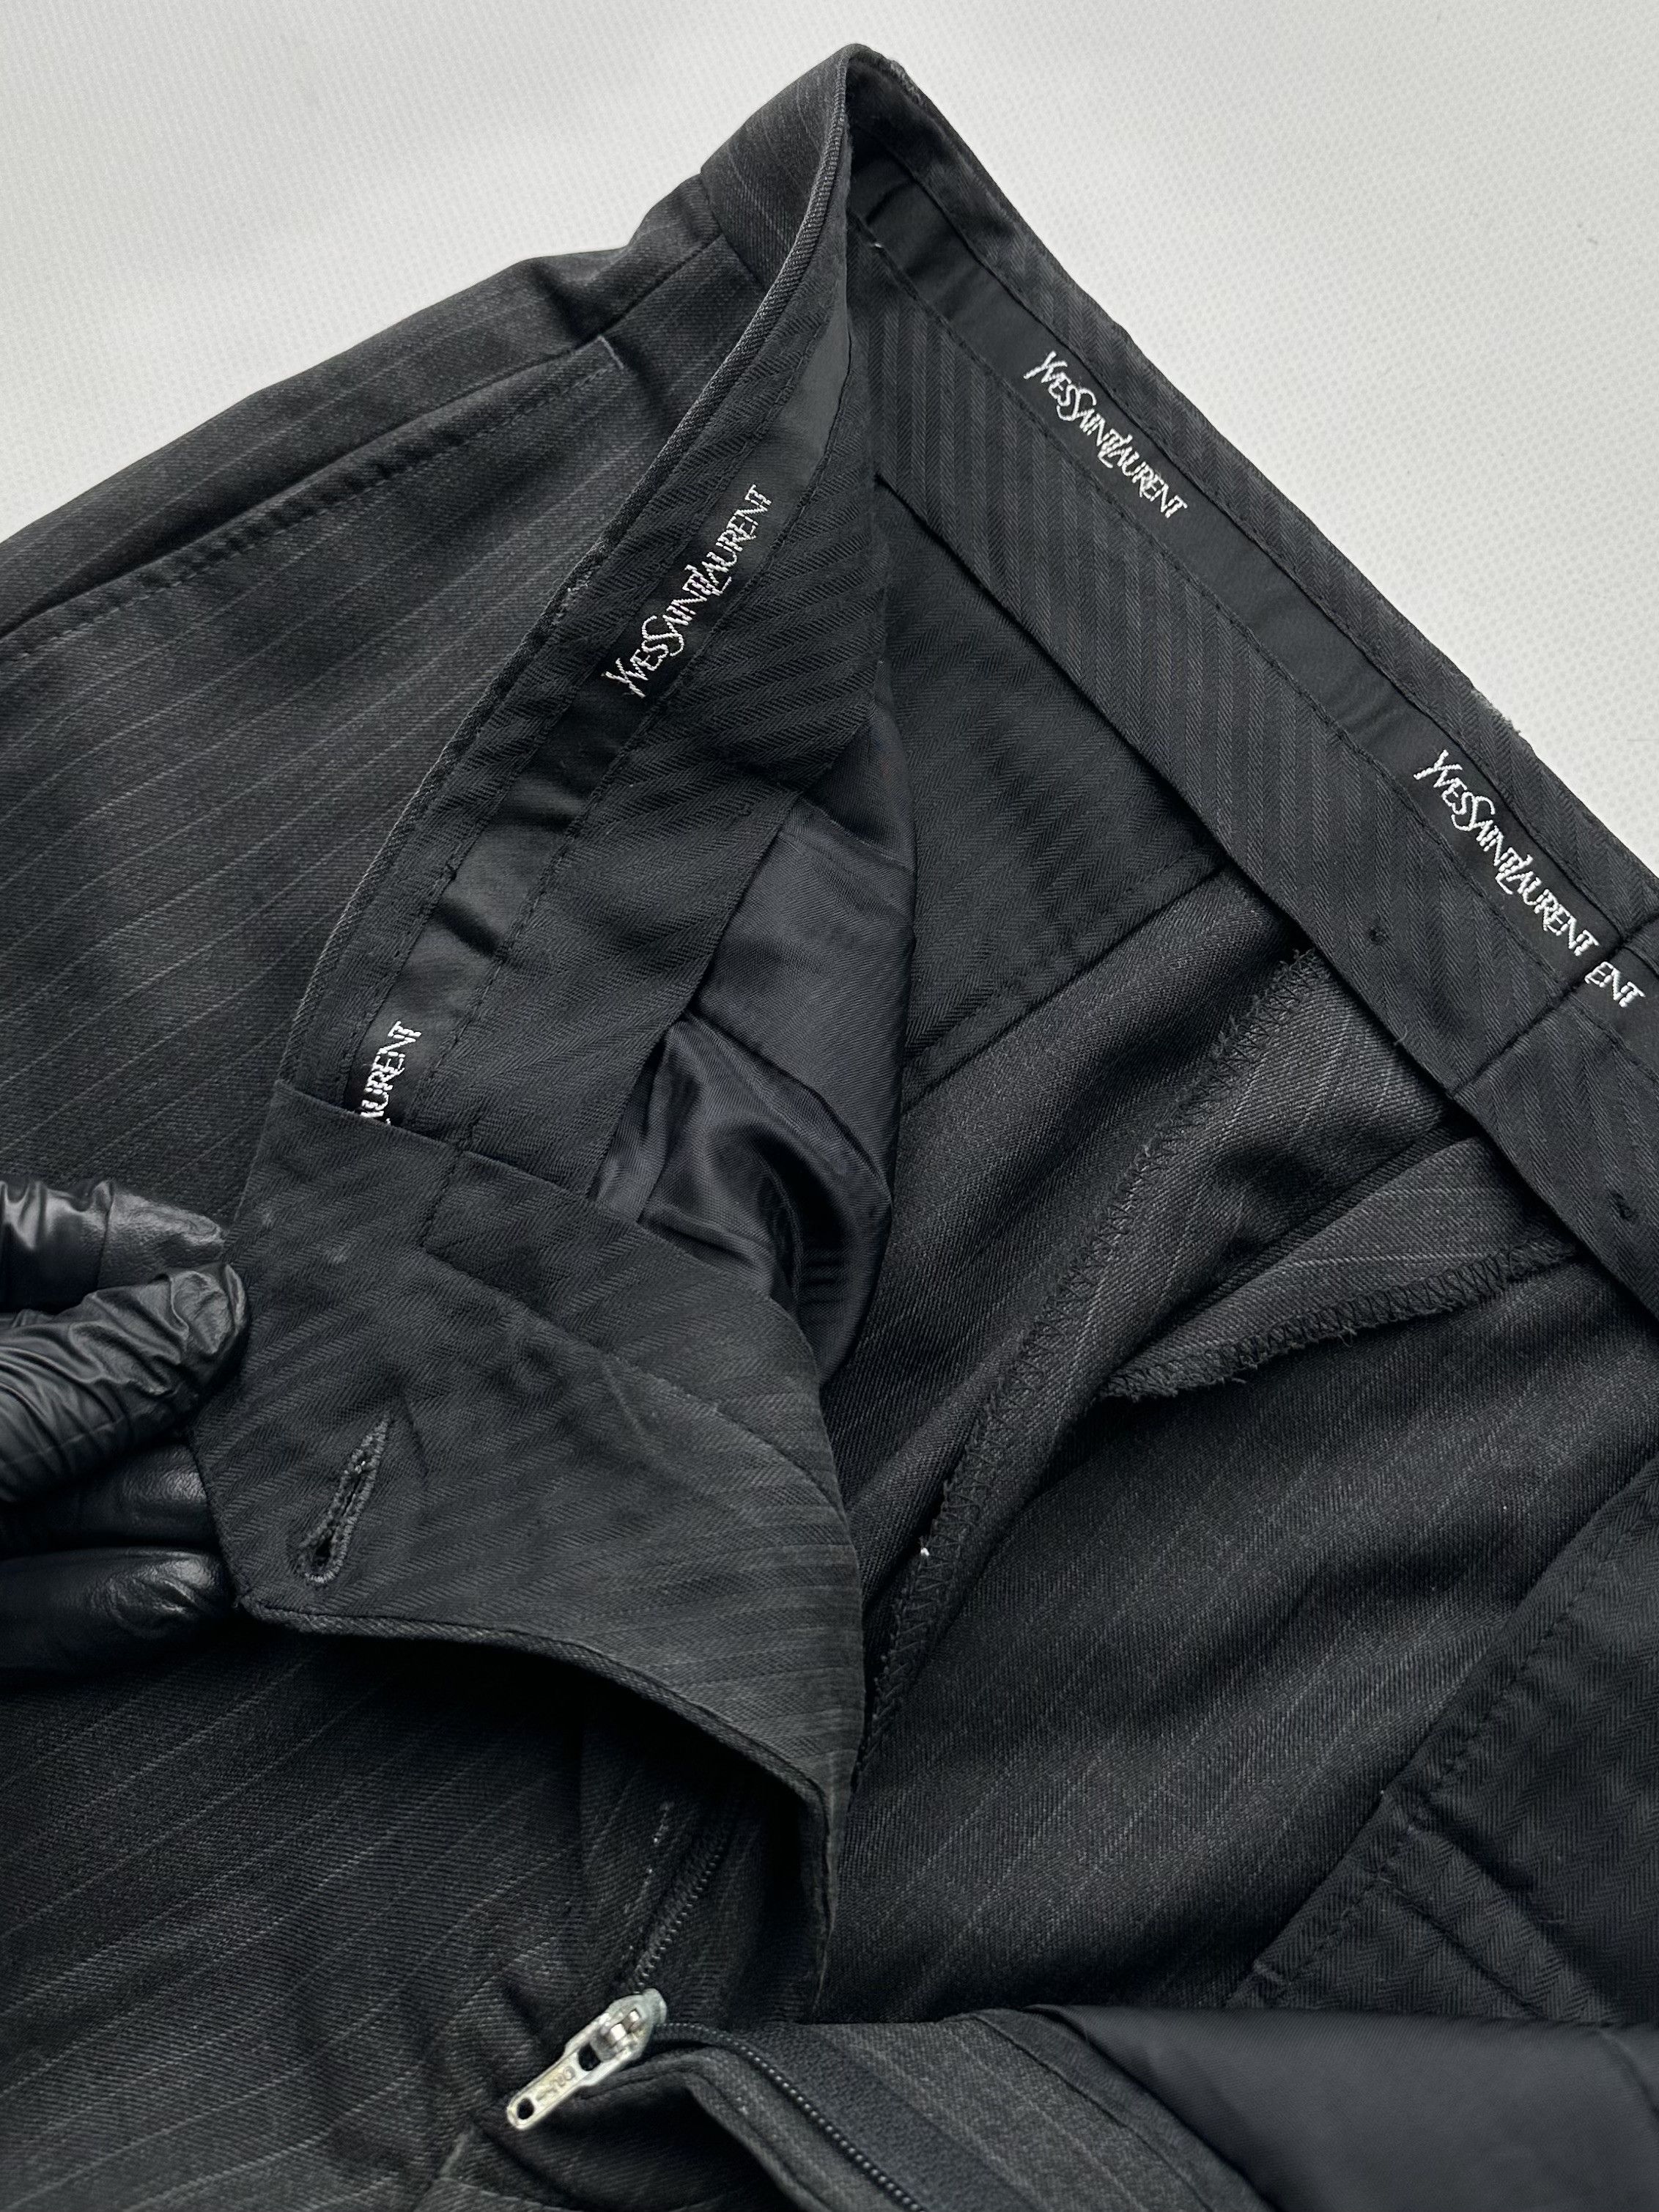 Vintage Yves Saint Laurent Vintage Wool Striped Pants Size US 34 / EU 50 - 8 Thumbnail